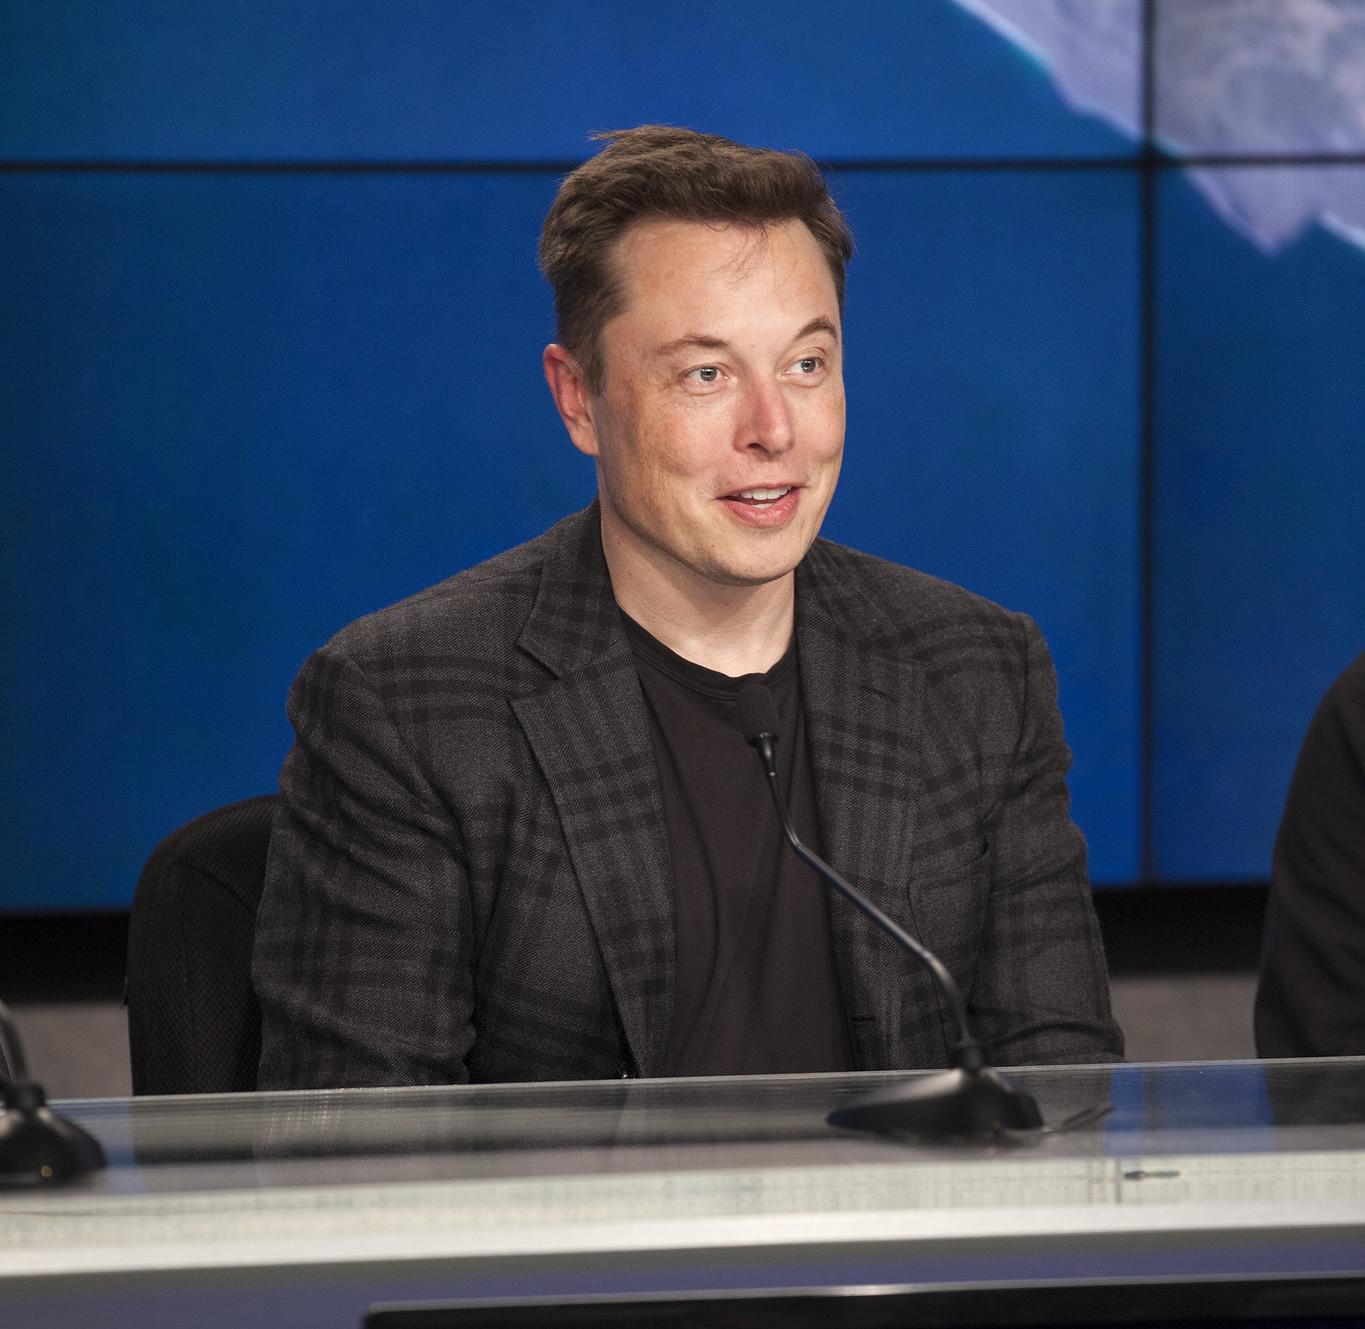 Elon Musk surpassed Jeff Bezos as Richest Man in the World